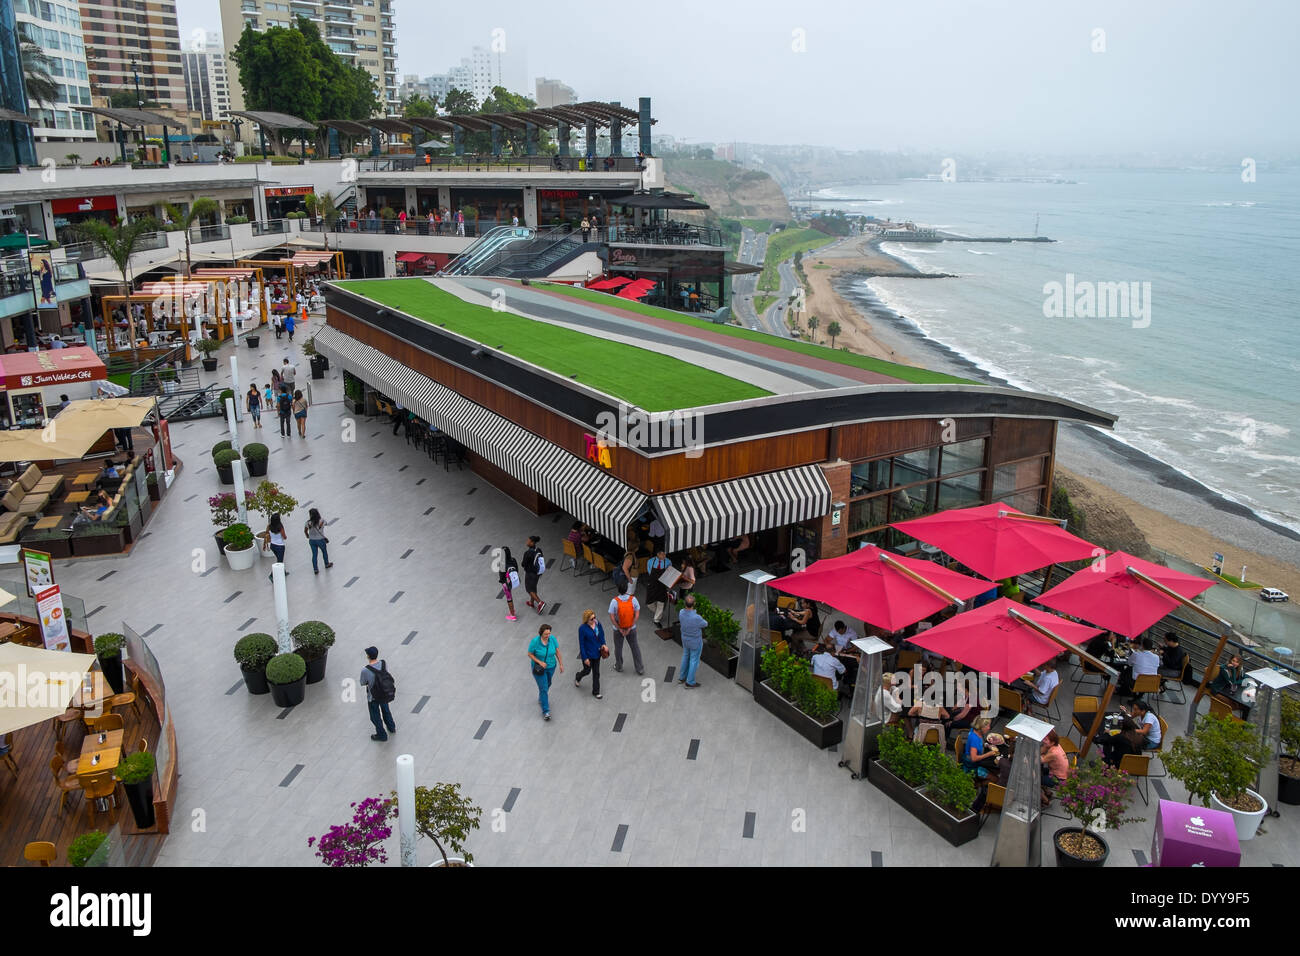 LIMA, PERU - CIRCA APRIL 2014: View of the Larcomar shopping center in the Miraflores area of Lima, Peru. Stock Photo